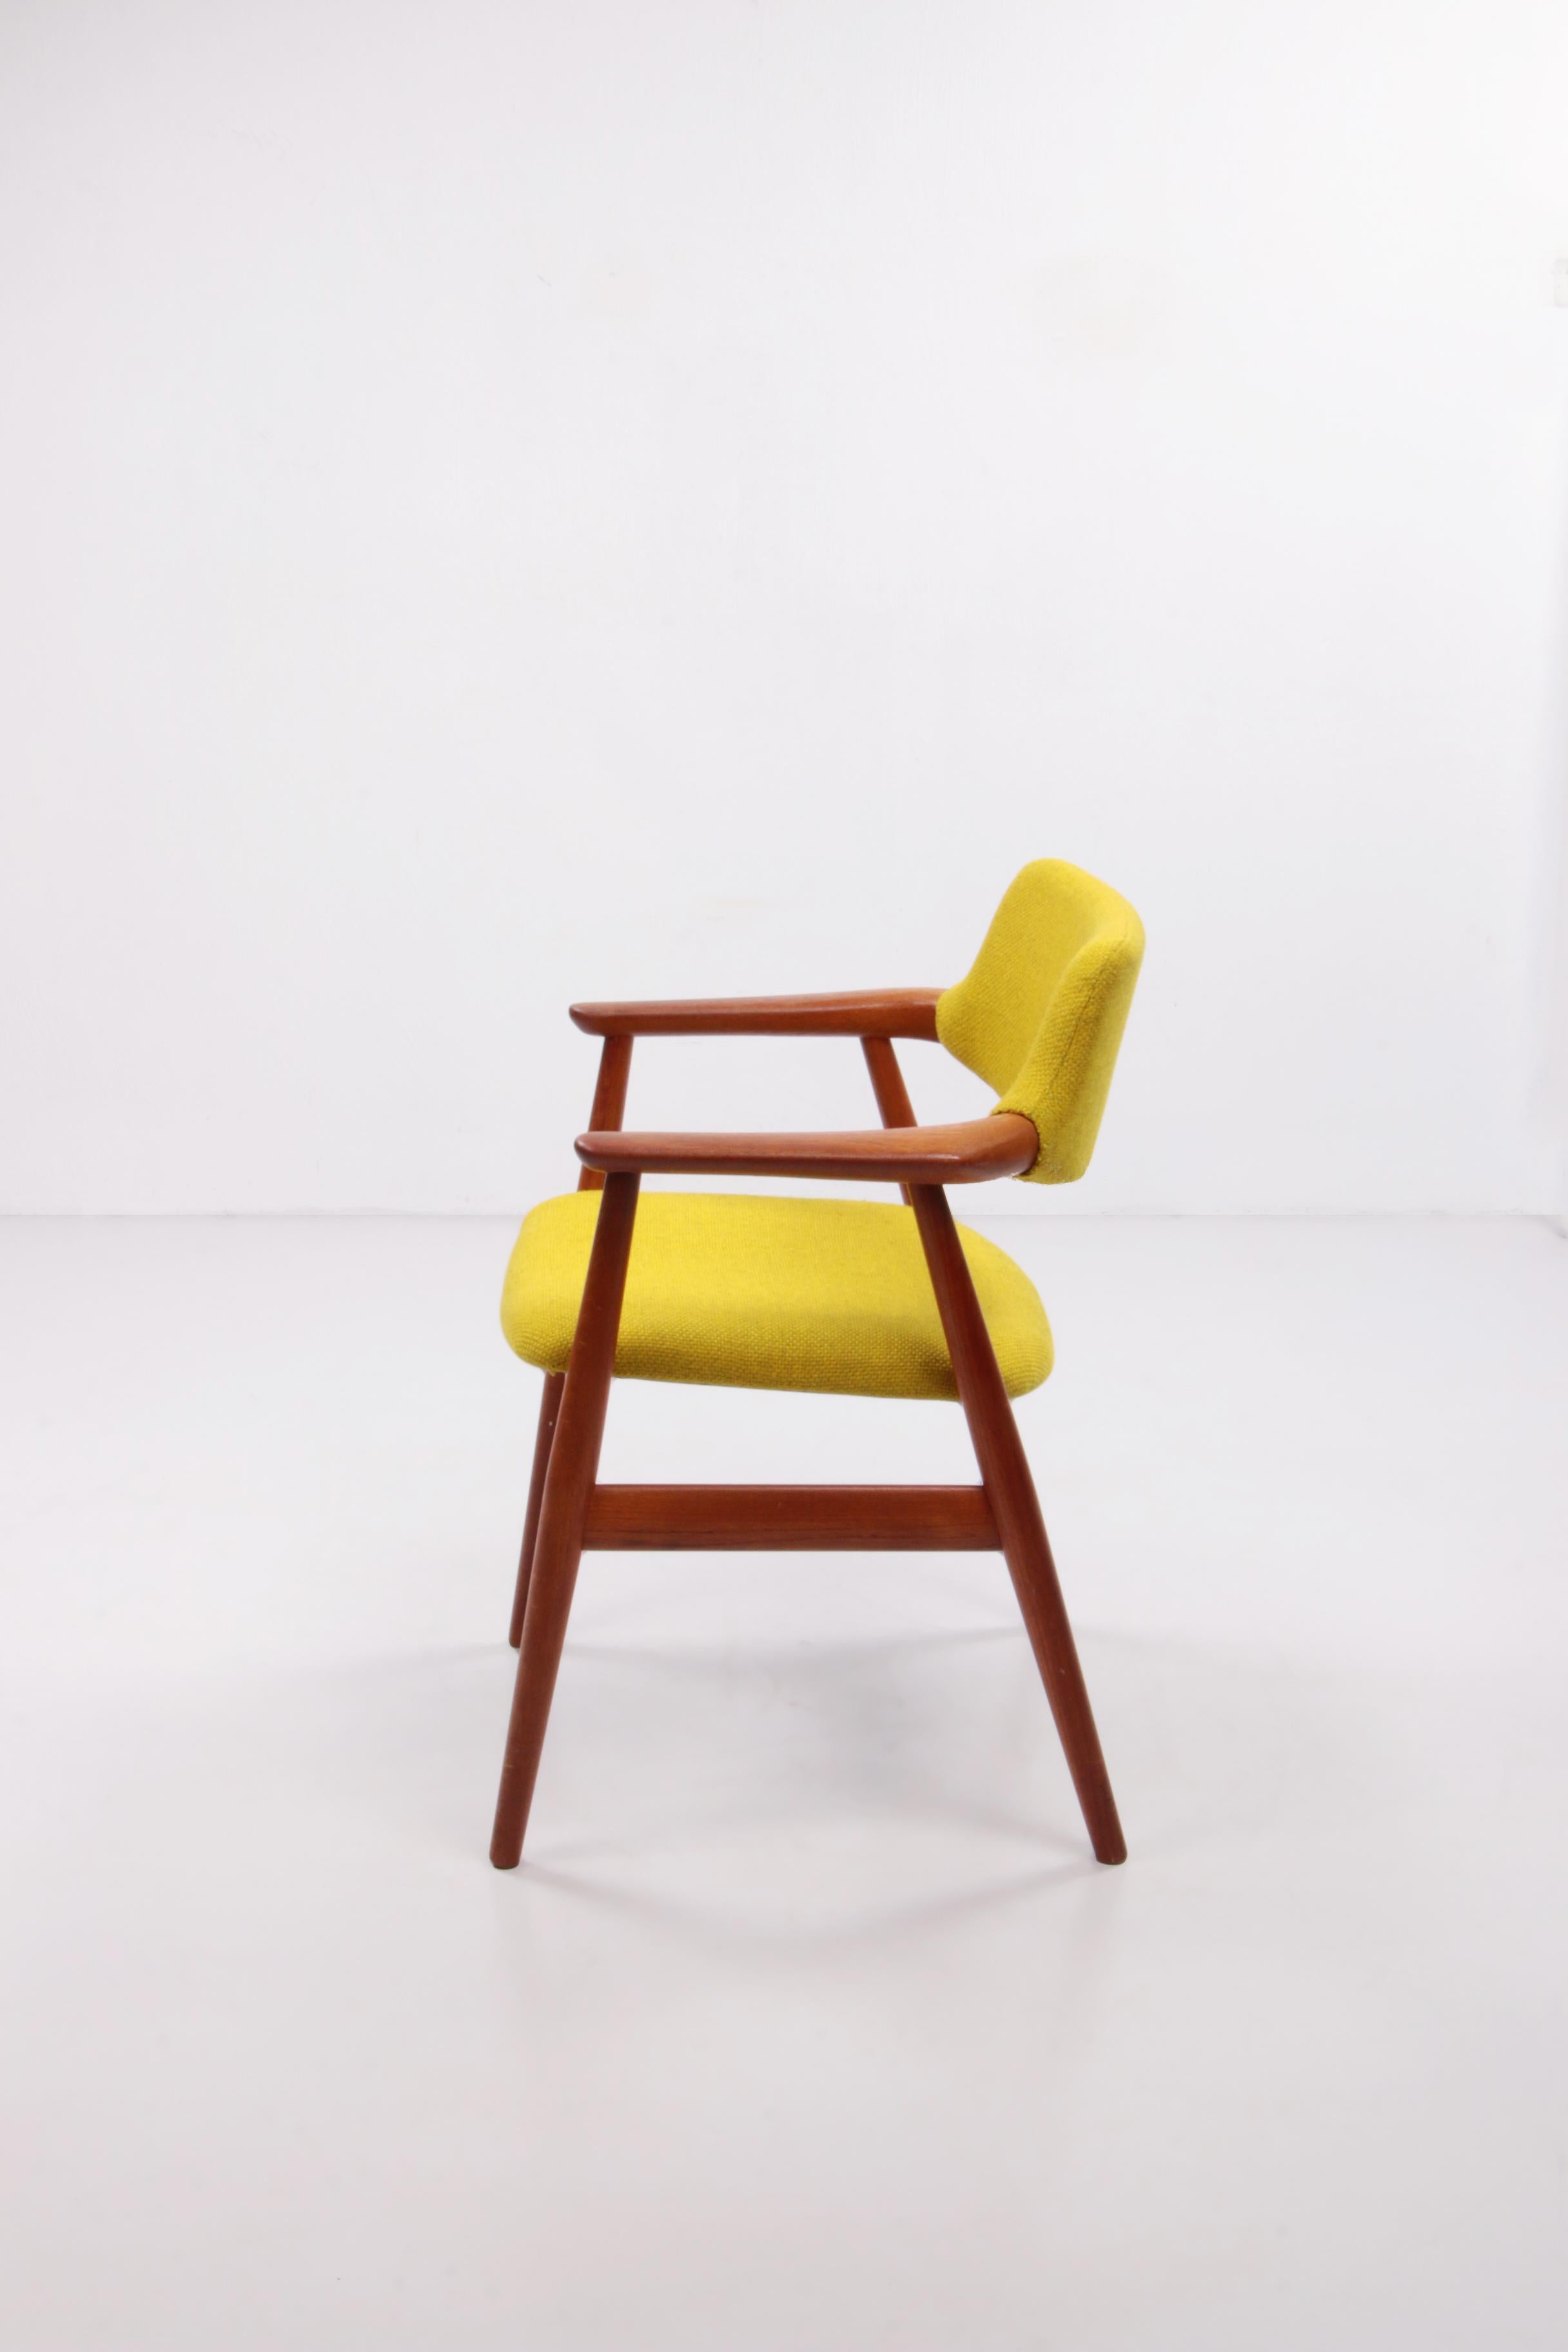 Scandinavian Modern Danish Dining Room Chair by Svend Age Eriksen Model Gm11, 1960s